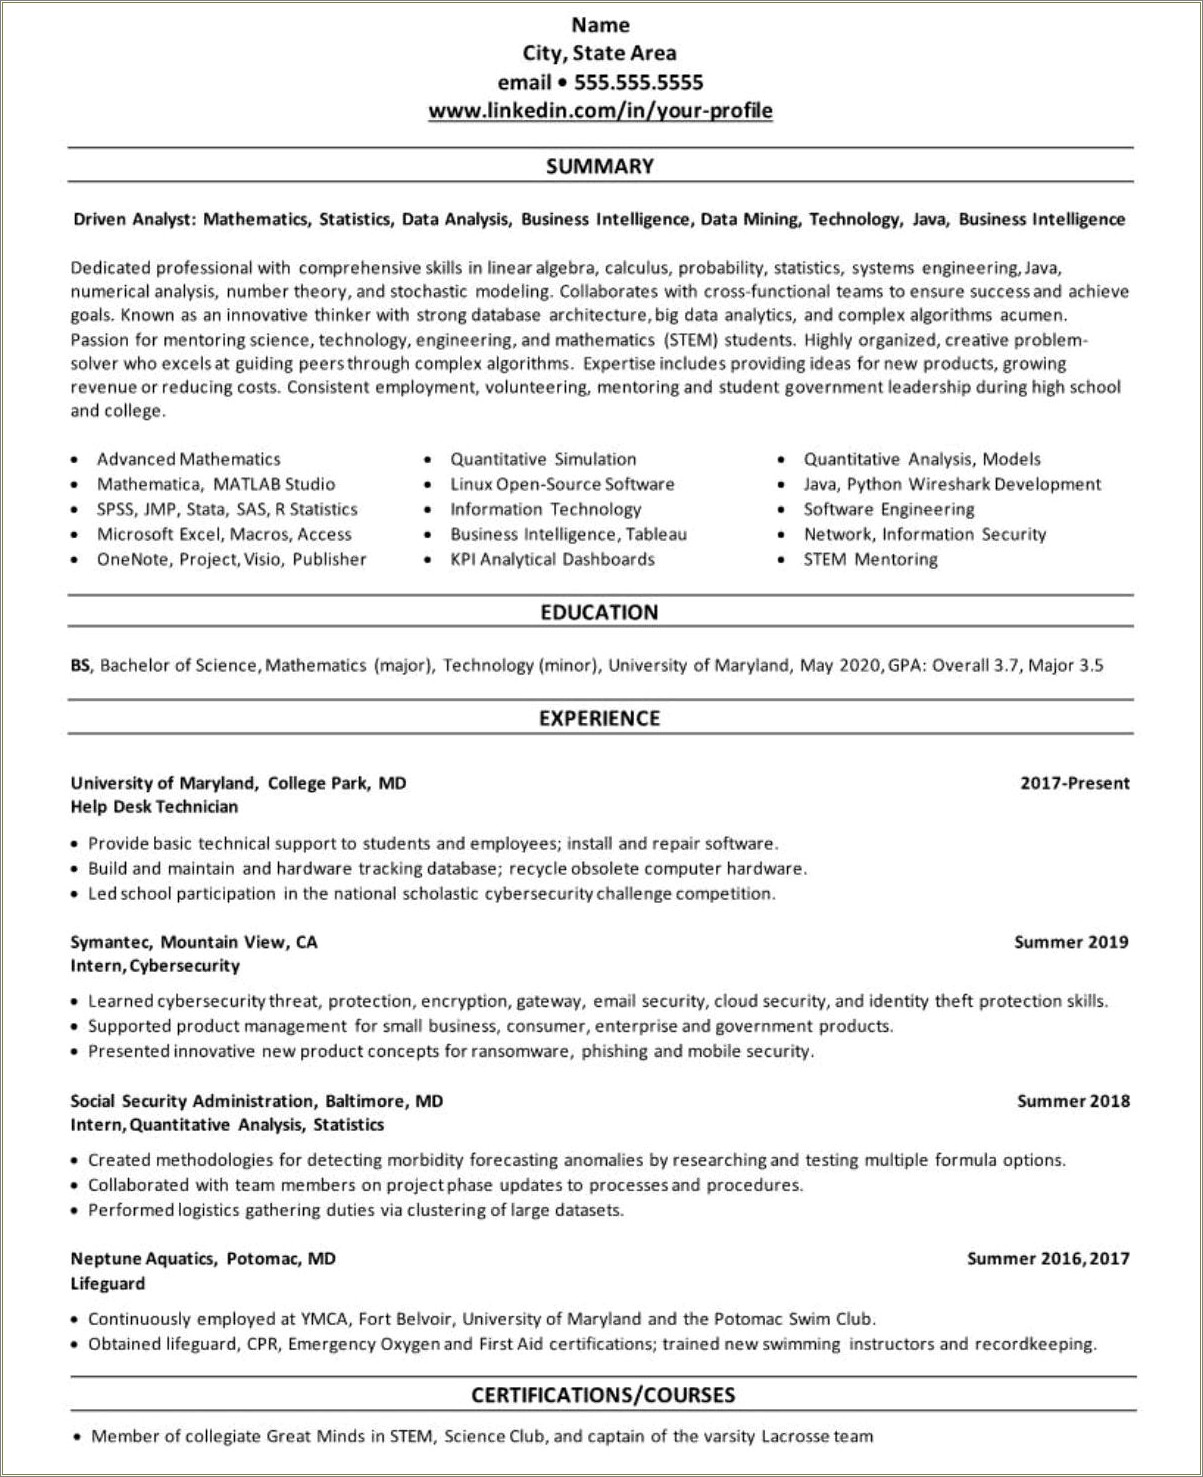 ucla career center resume template